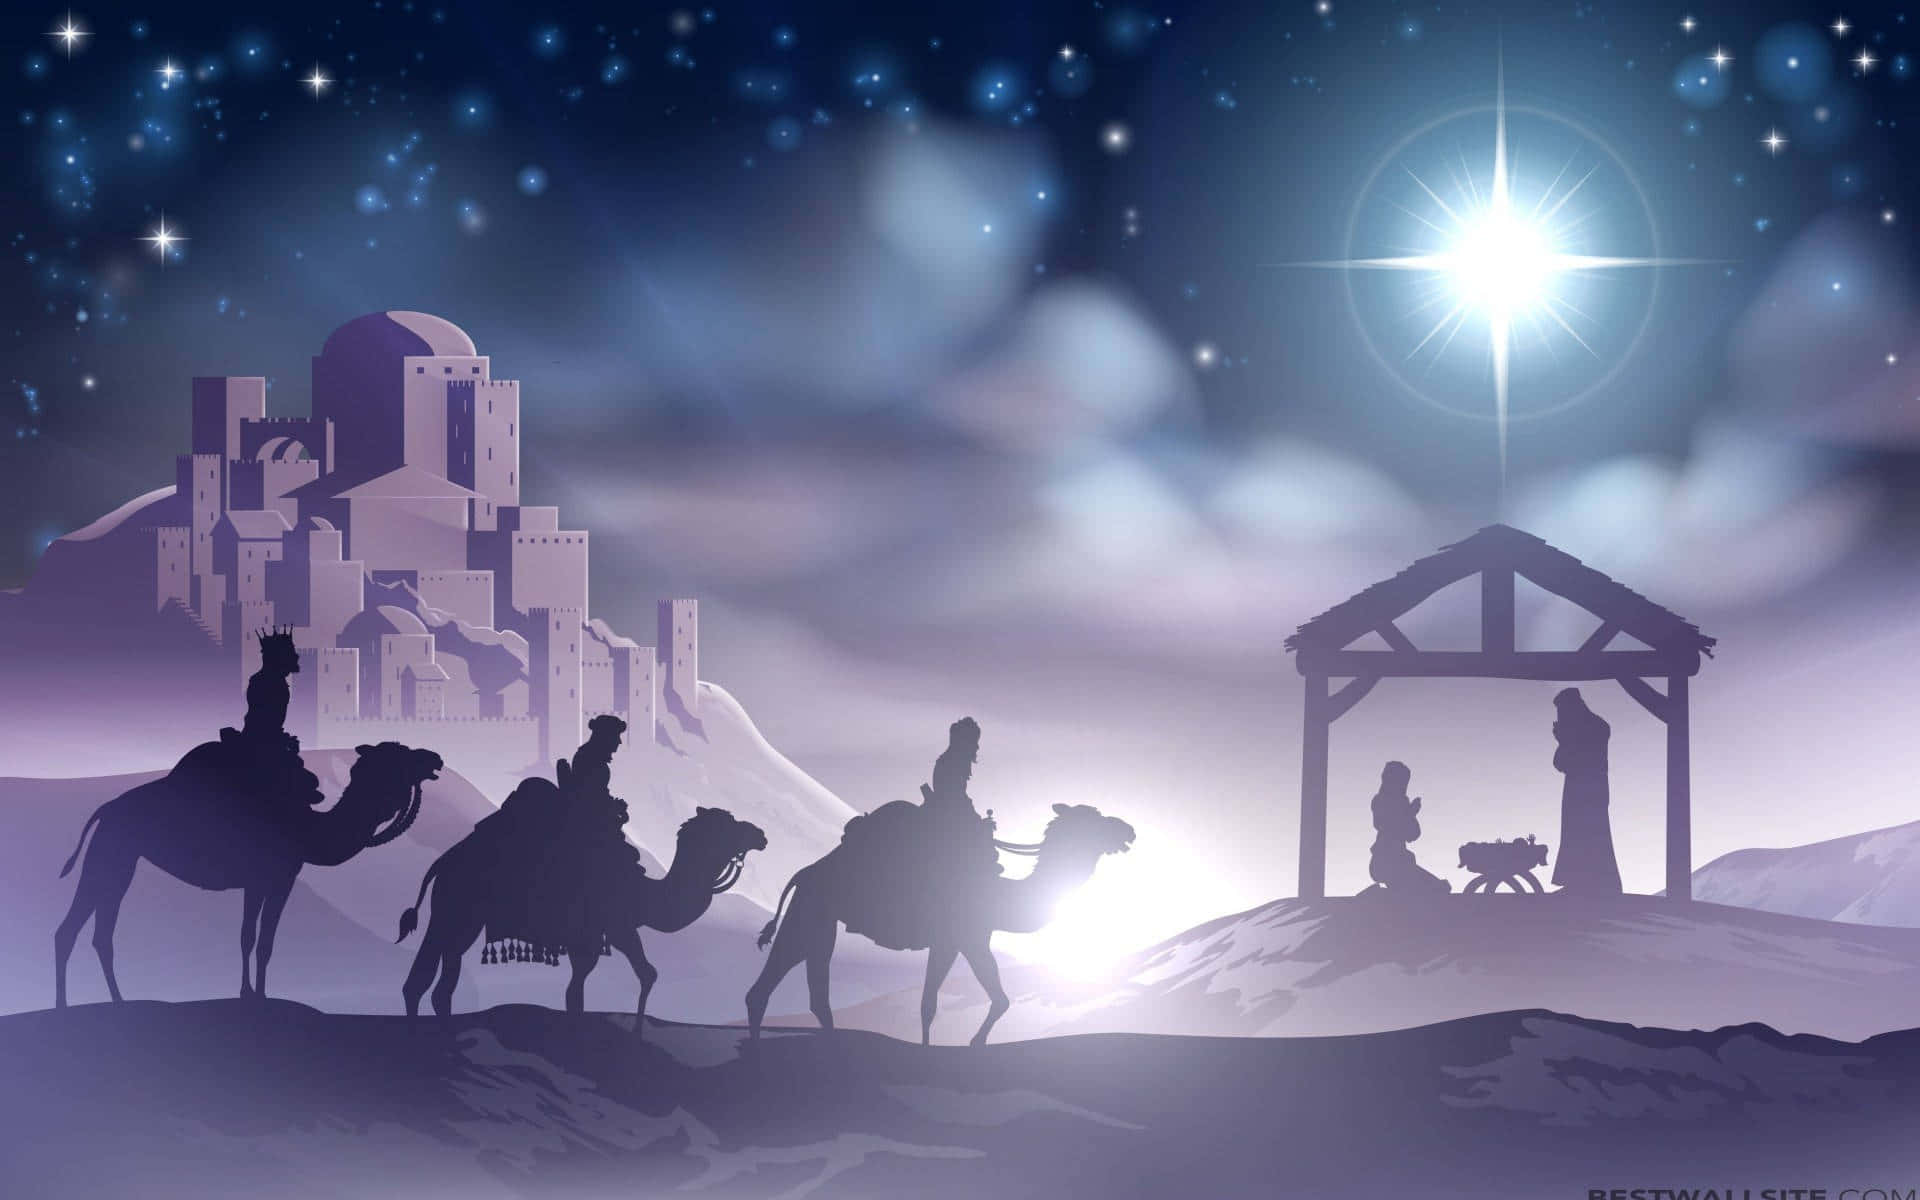 Image  Nativity Scene Celebrating the Birth of Jesus